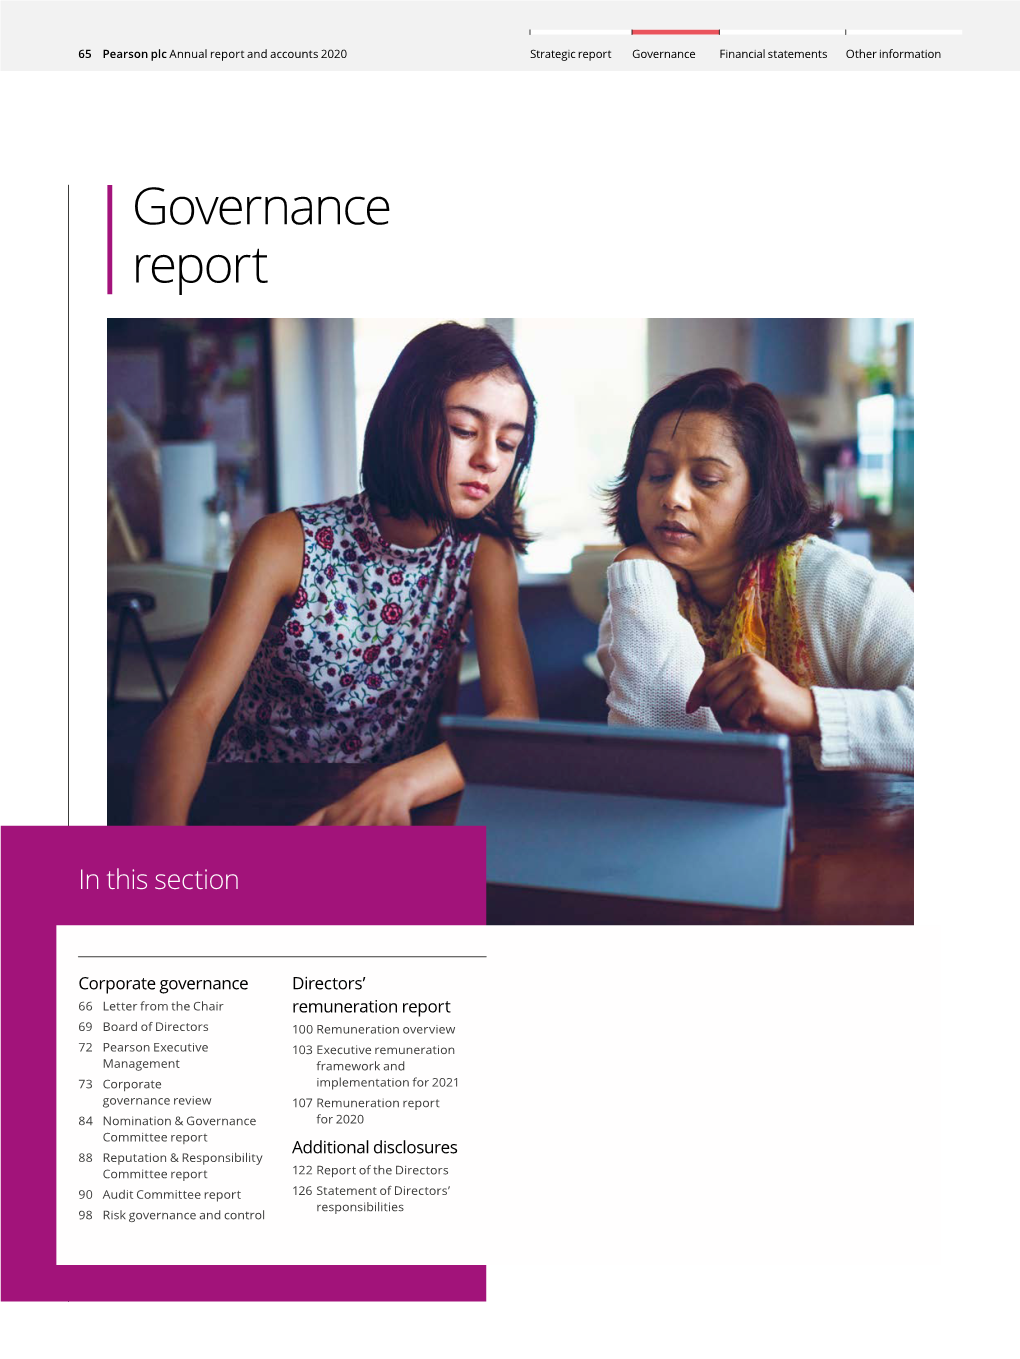 Governance Report